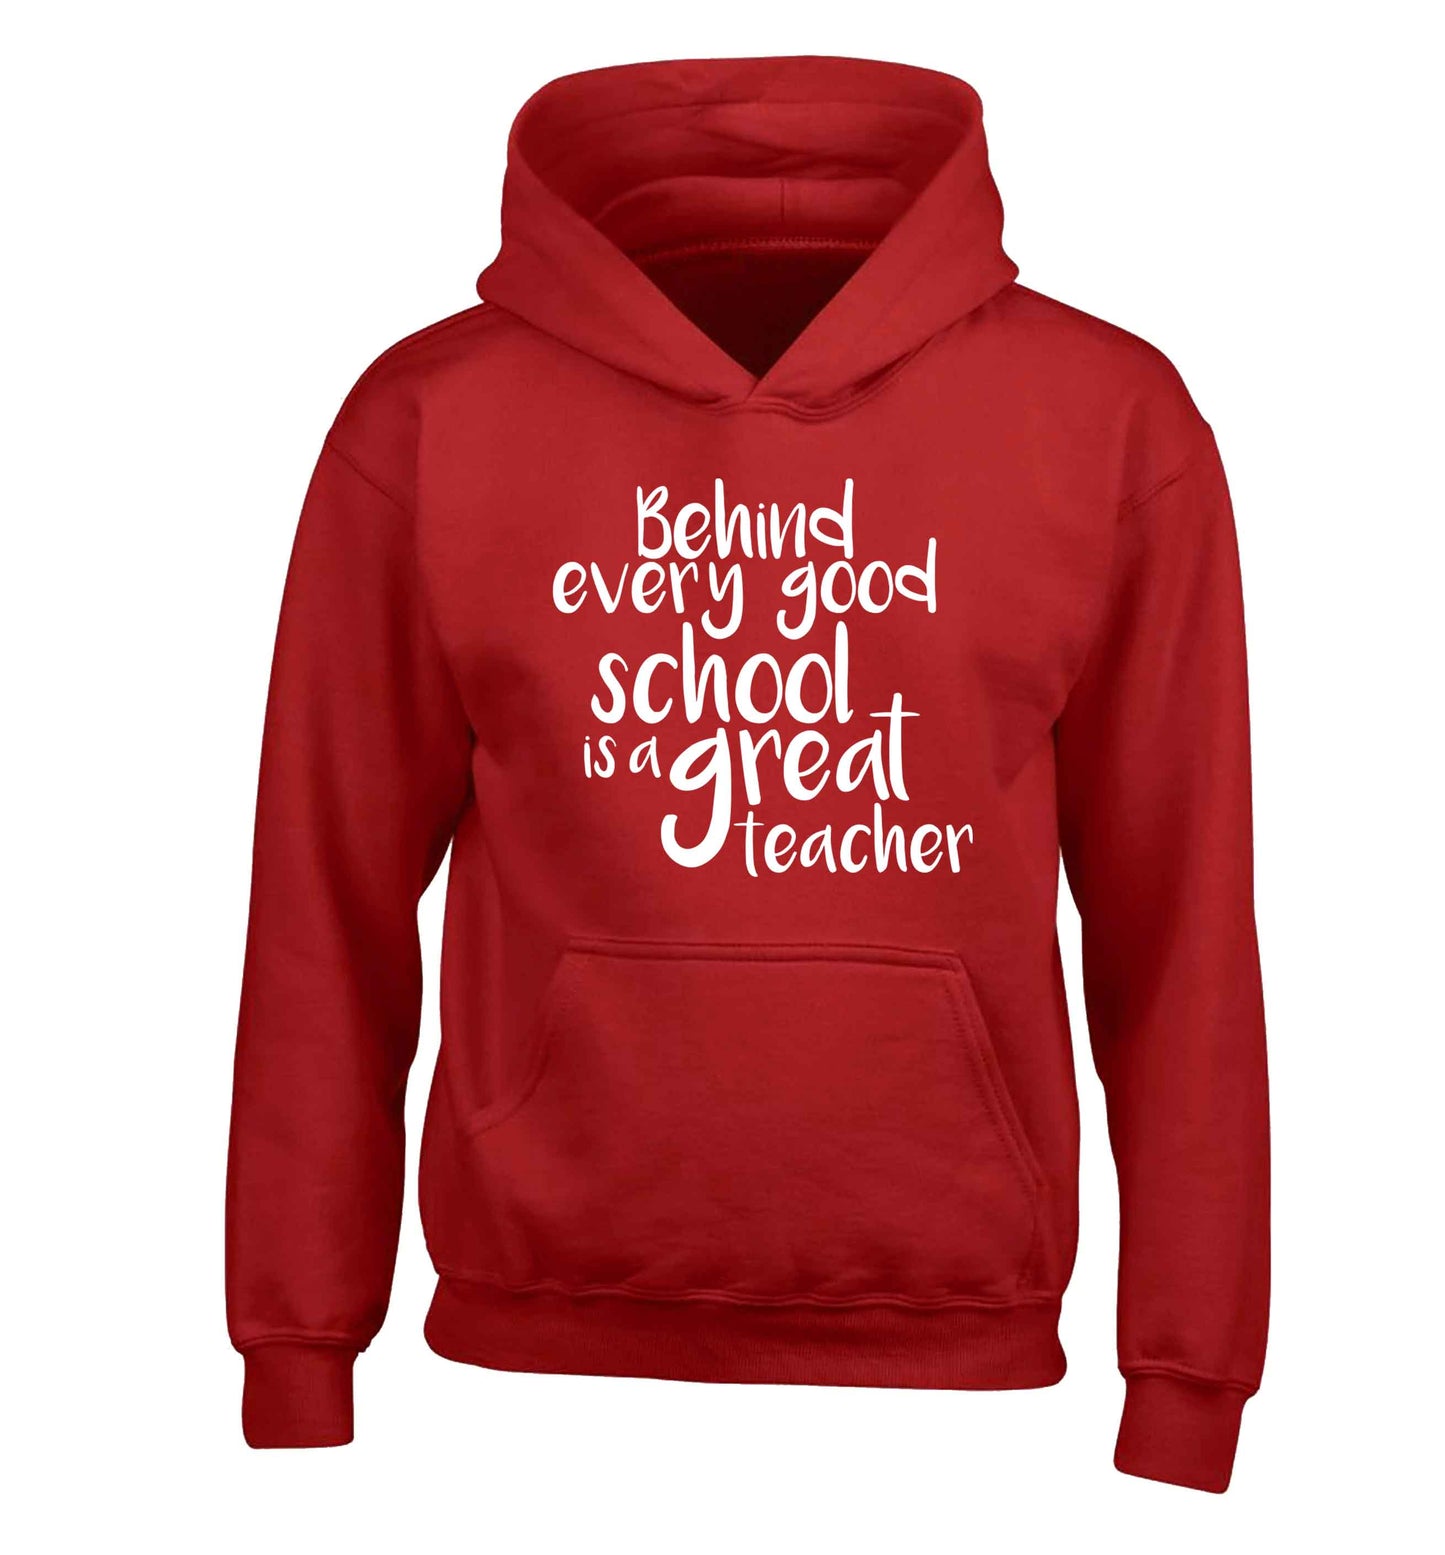 Behind every good school is a great teacher children's red hoodie 12-13 Years